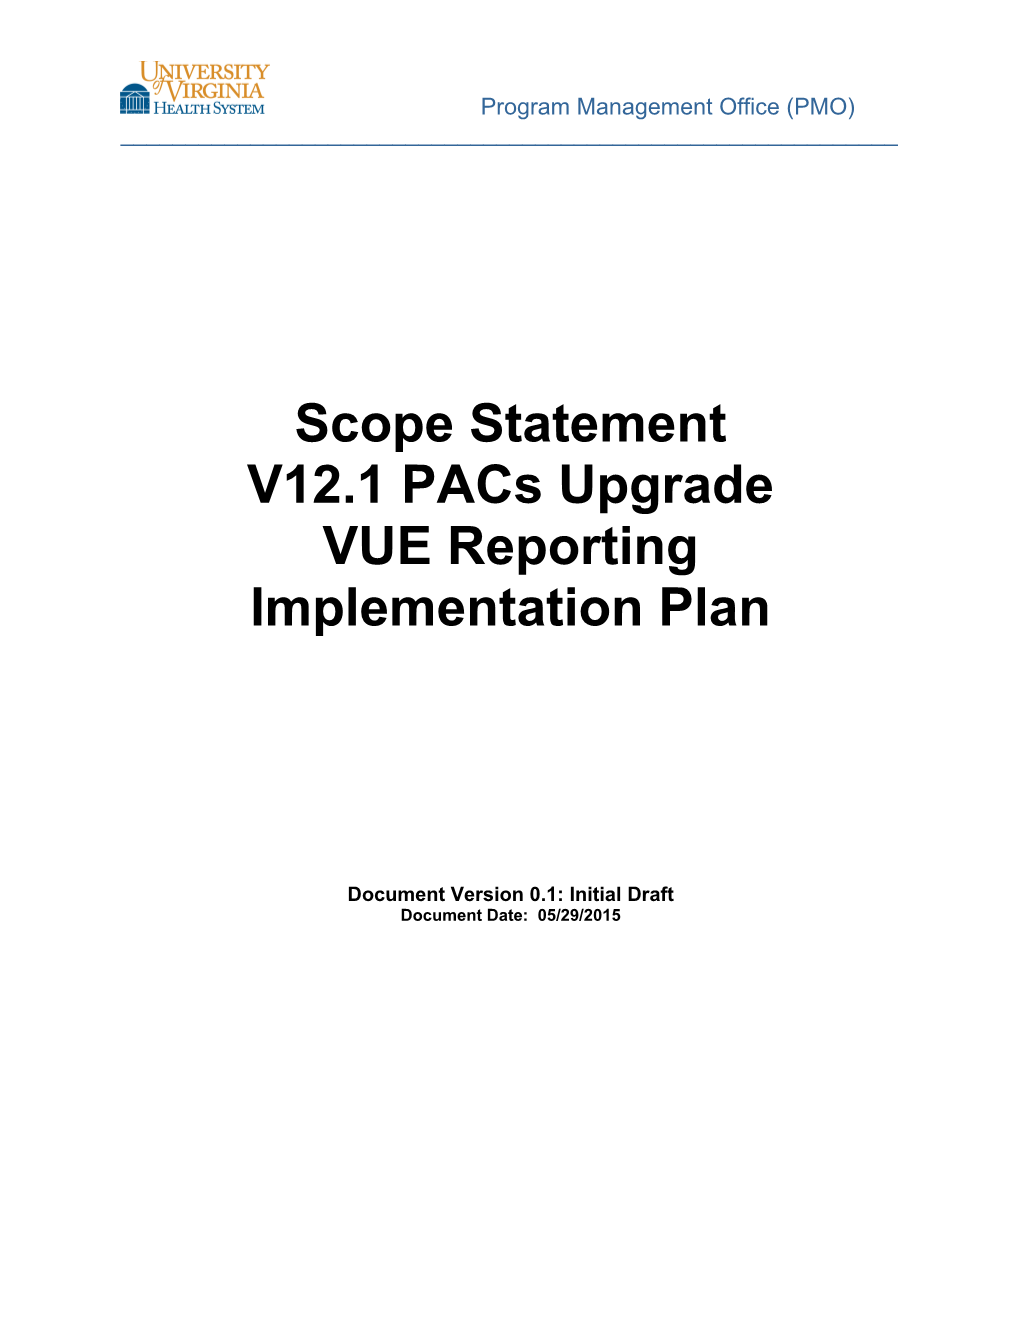 V12.1 Pacs Upgrade